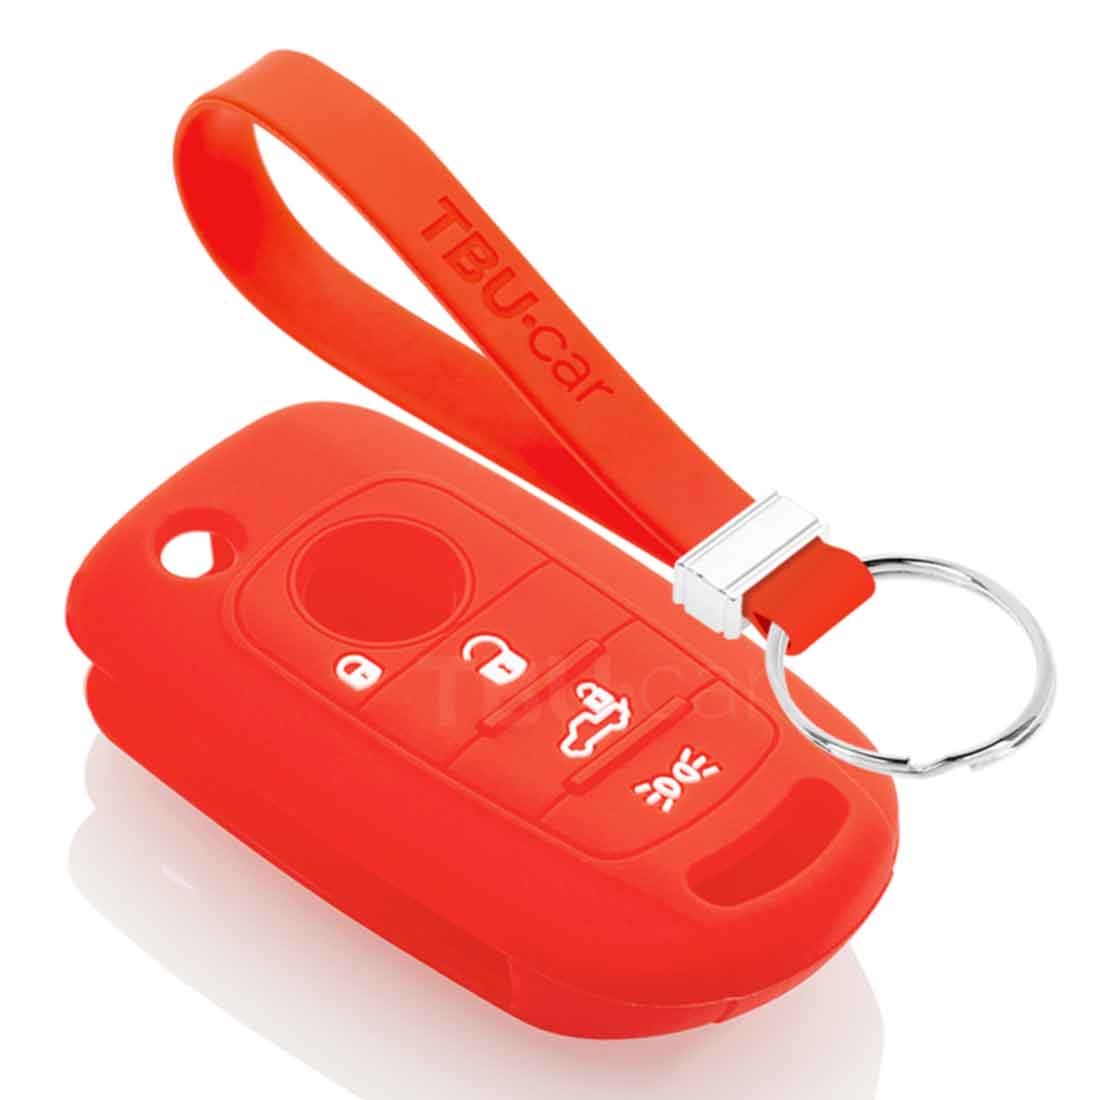 TBU car TBU car Autoschlüssel Hülle kompatibel mit Fiat 4 Tasten - Schutzhülle aus Silikon - Auto Schlüsselhülle Cover in Rot